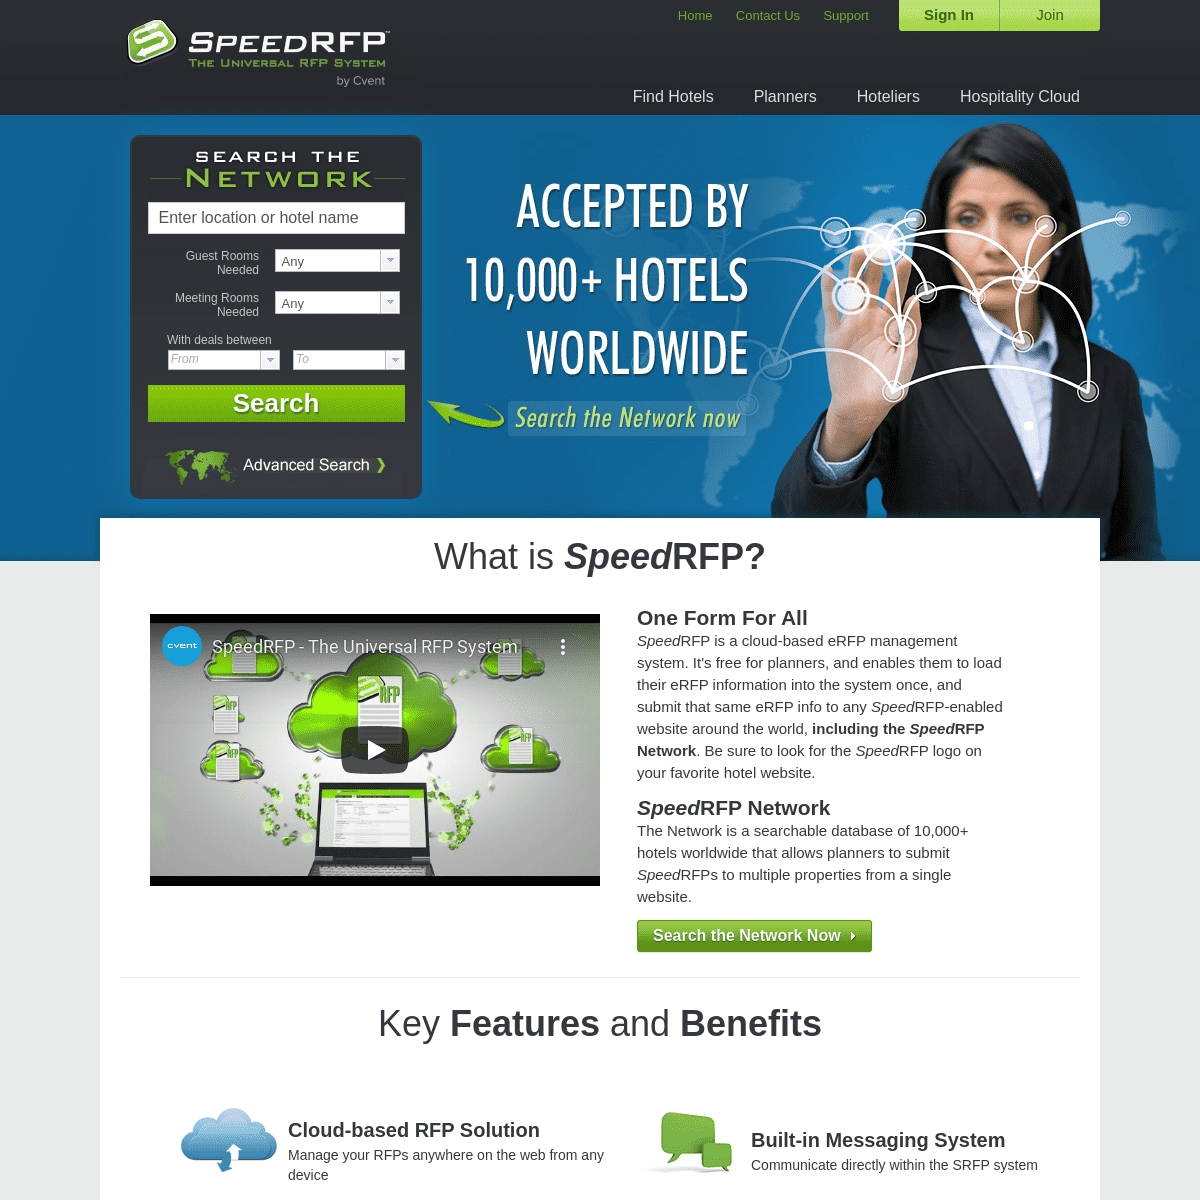 A complete backup of speedrfp.com